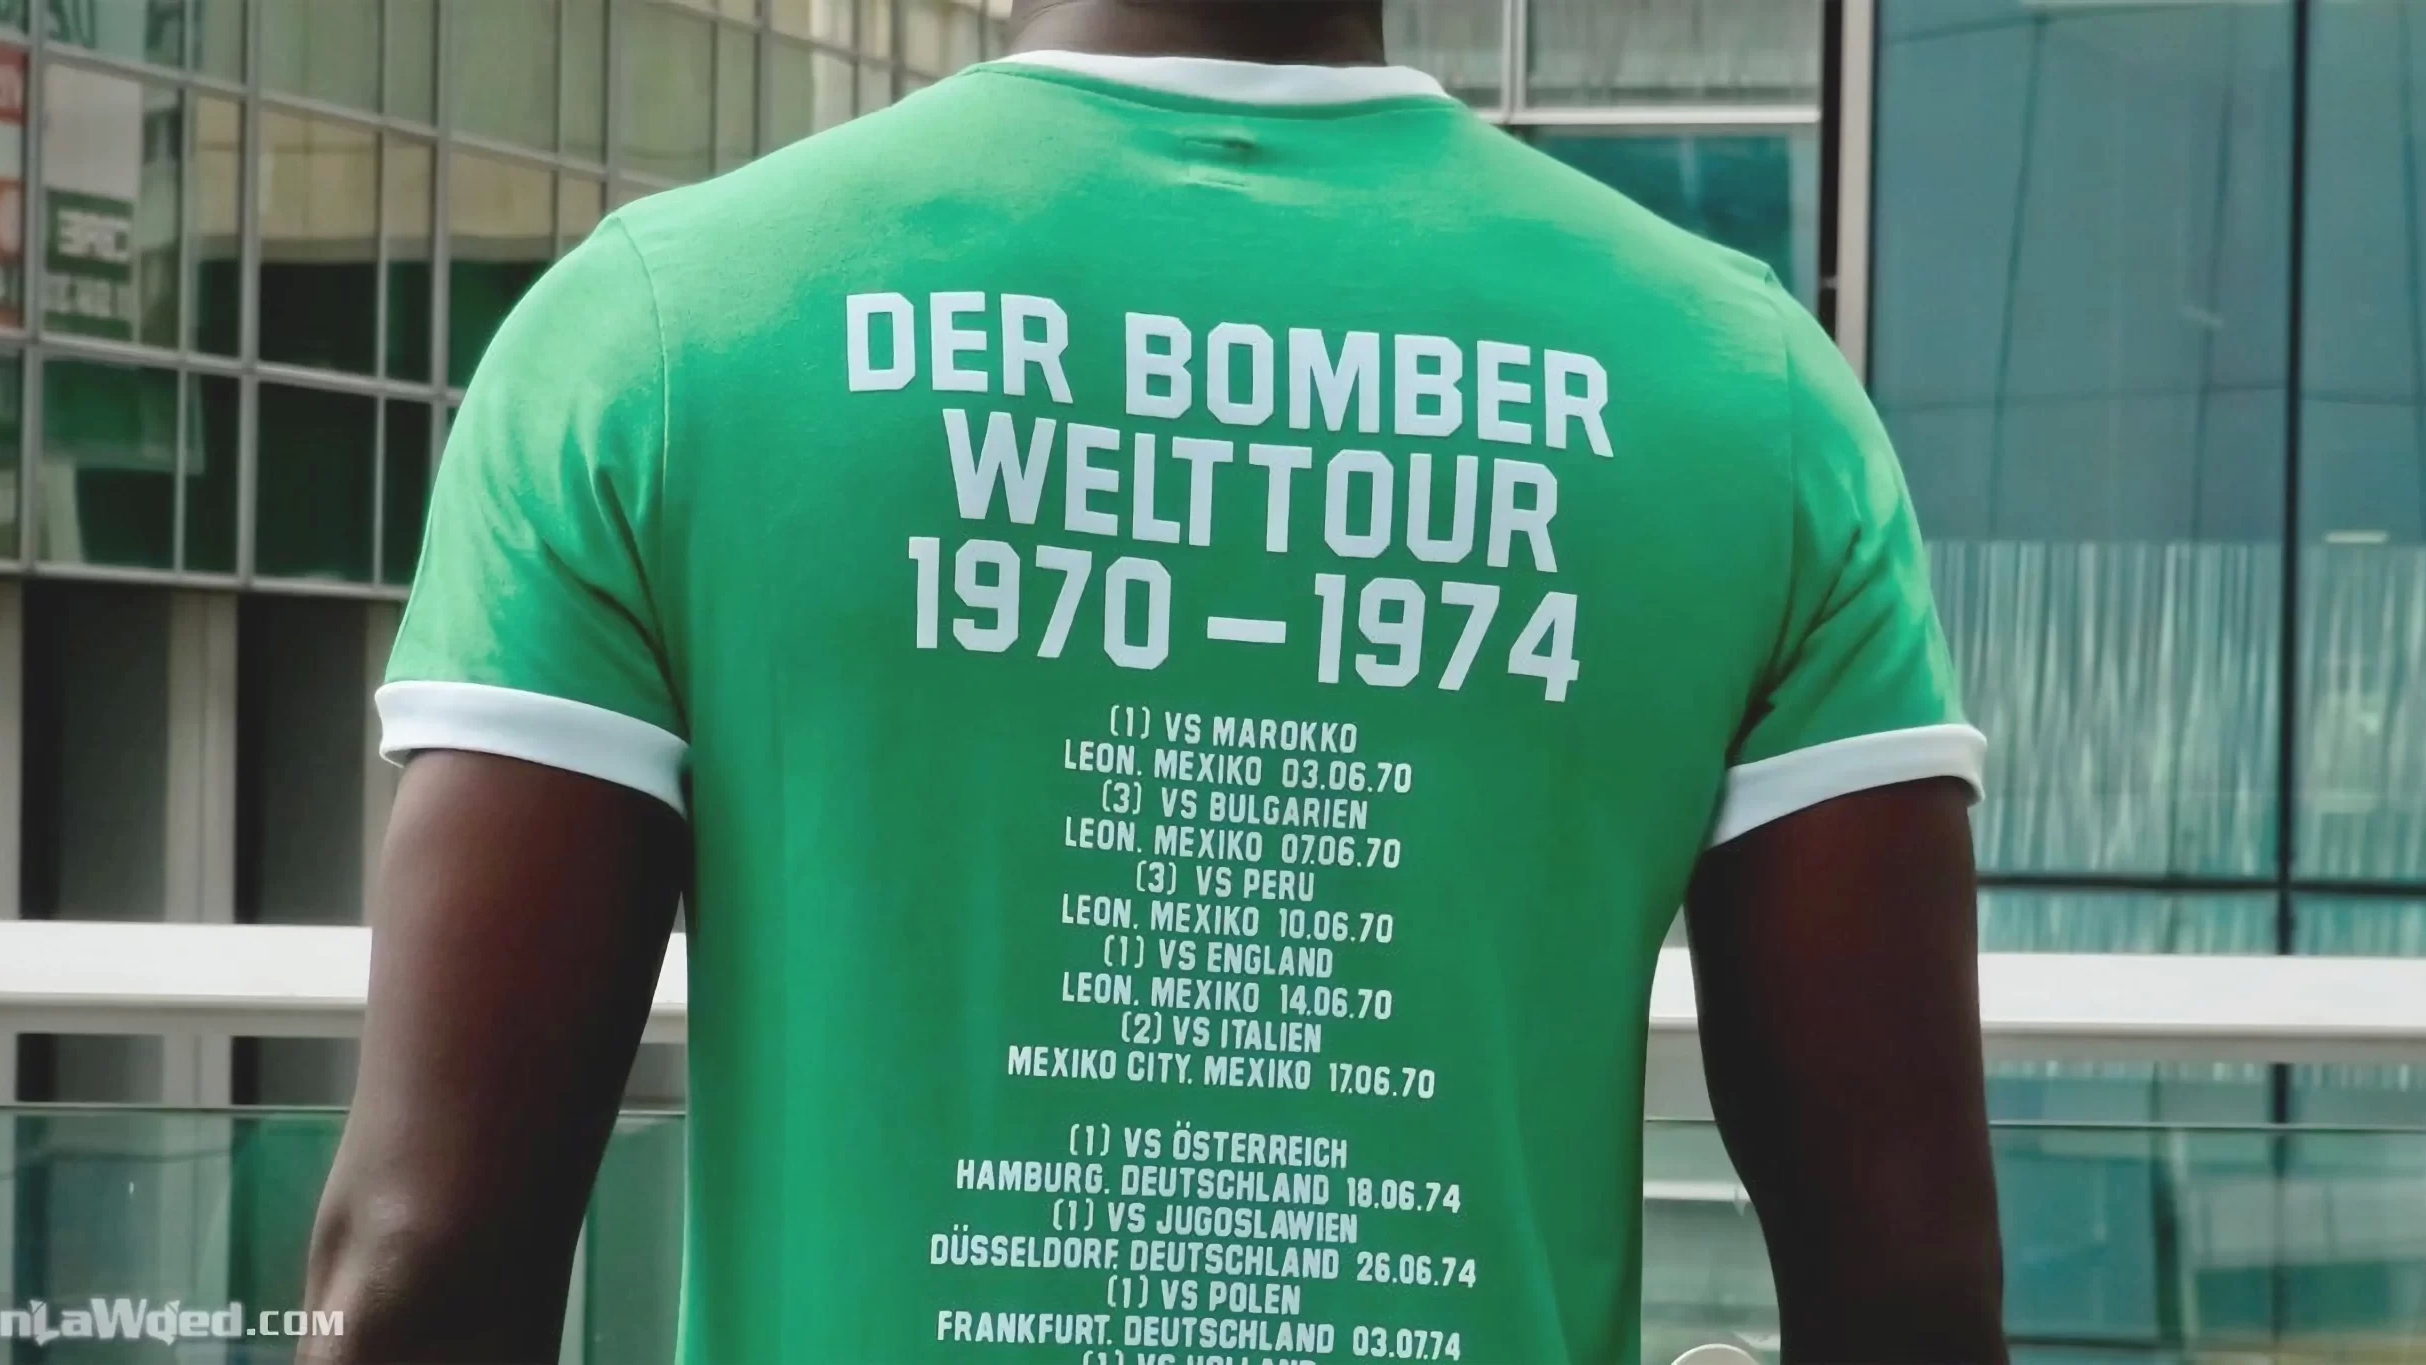 Men’s 2006 Der Bomber ’70 T-shirt by Adidas Originals: Energetic (EnLawded.com file #lmc51fqe72hpm7gc8xt)